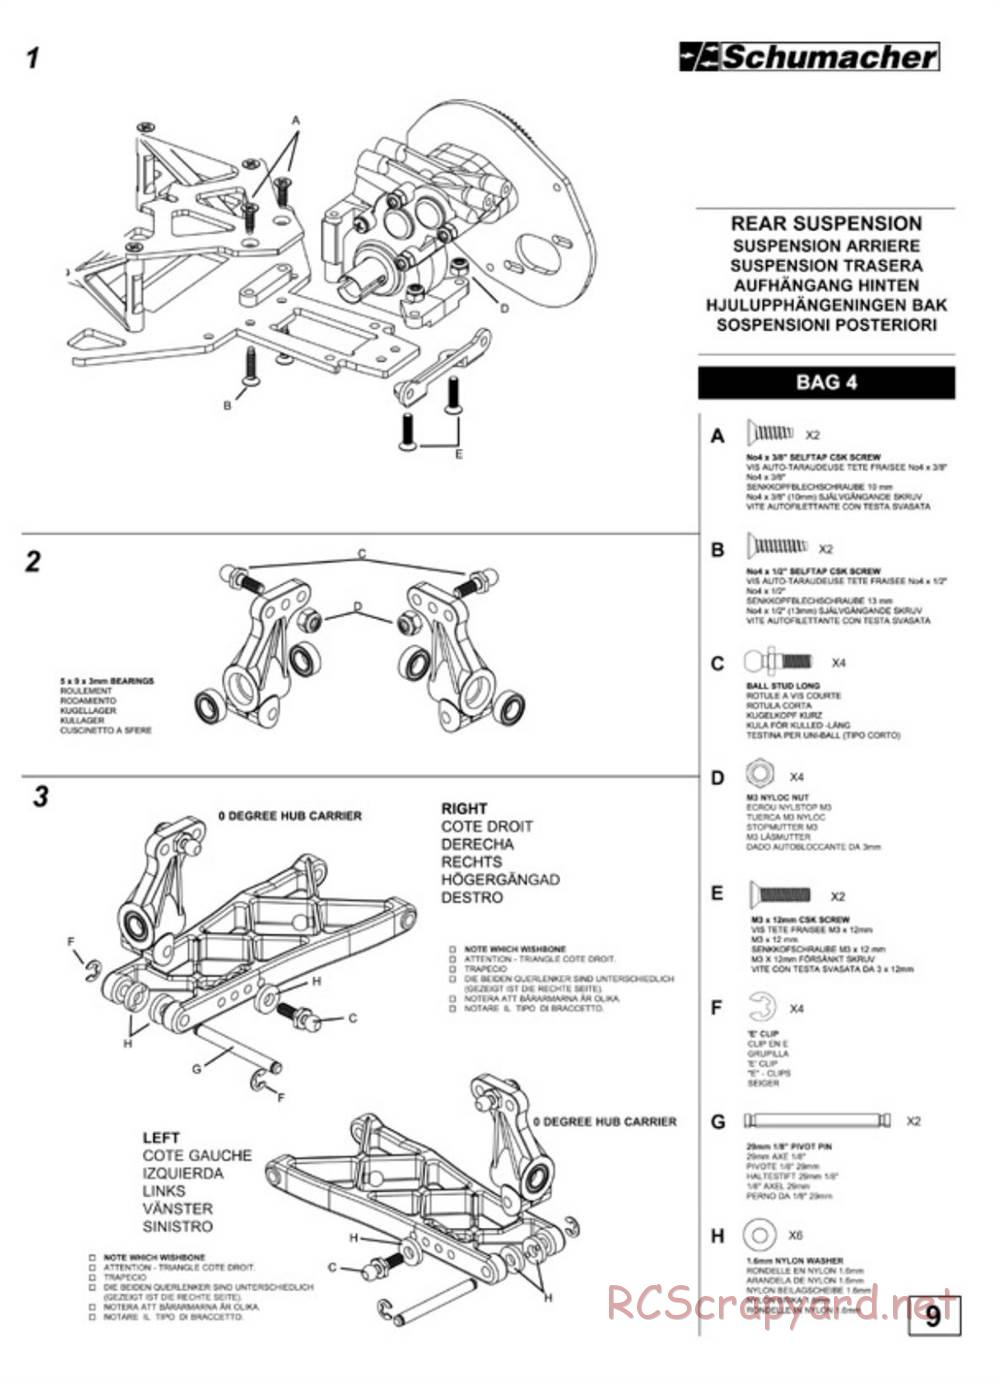 Schumacher - Fireblade Evo - Manual - Page 11